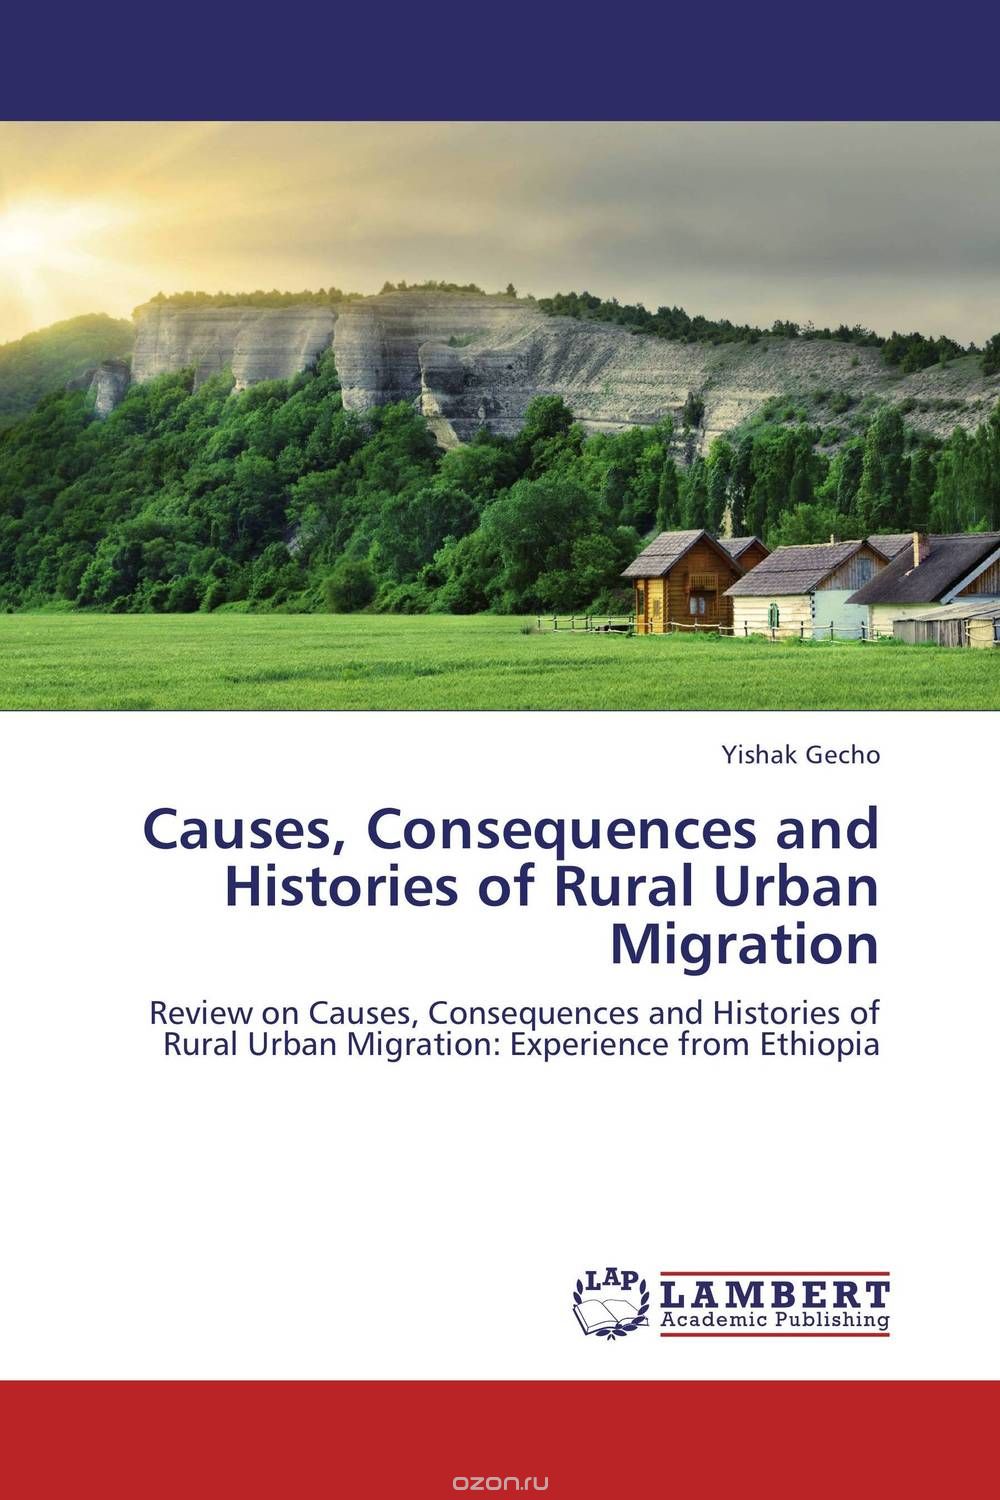 Скачать книгу "Causes, Consequences and Histories of Rural Urban Migration"